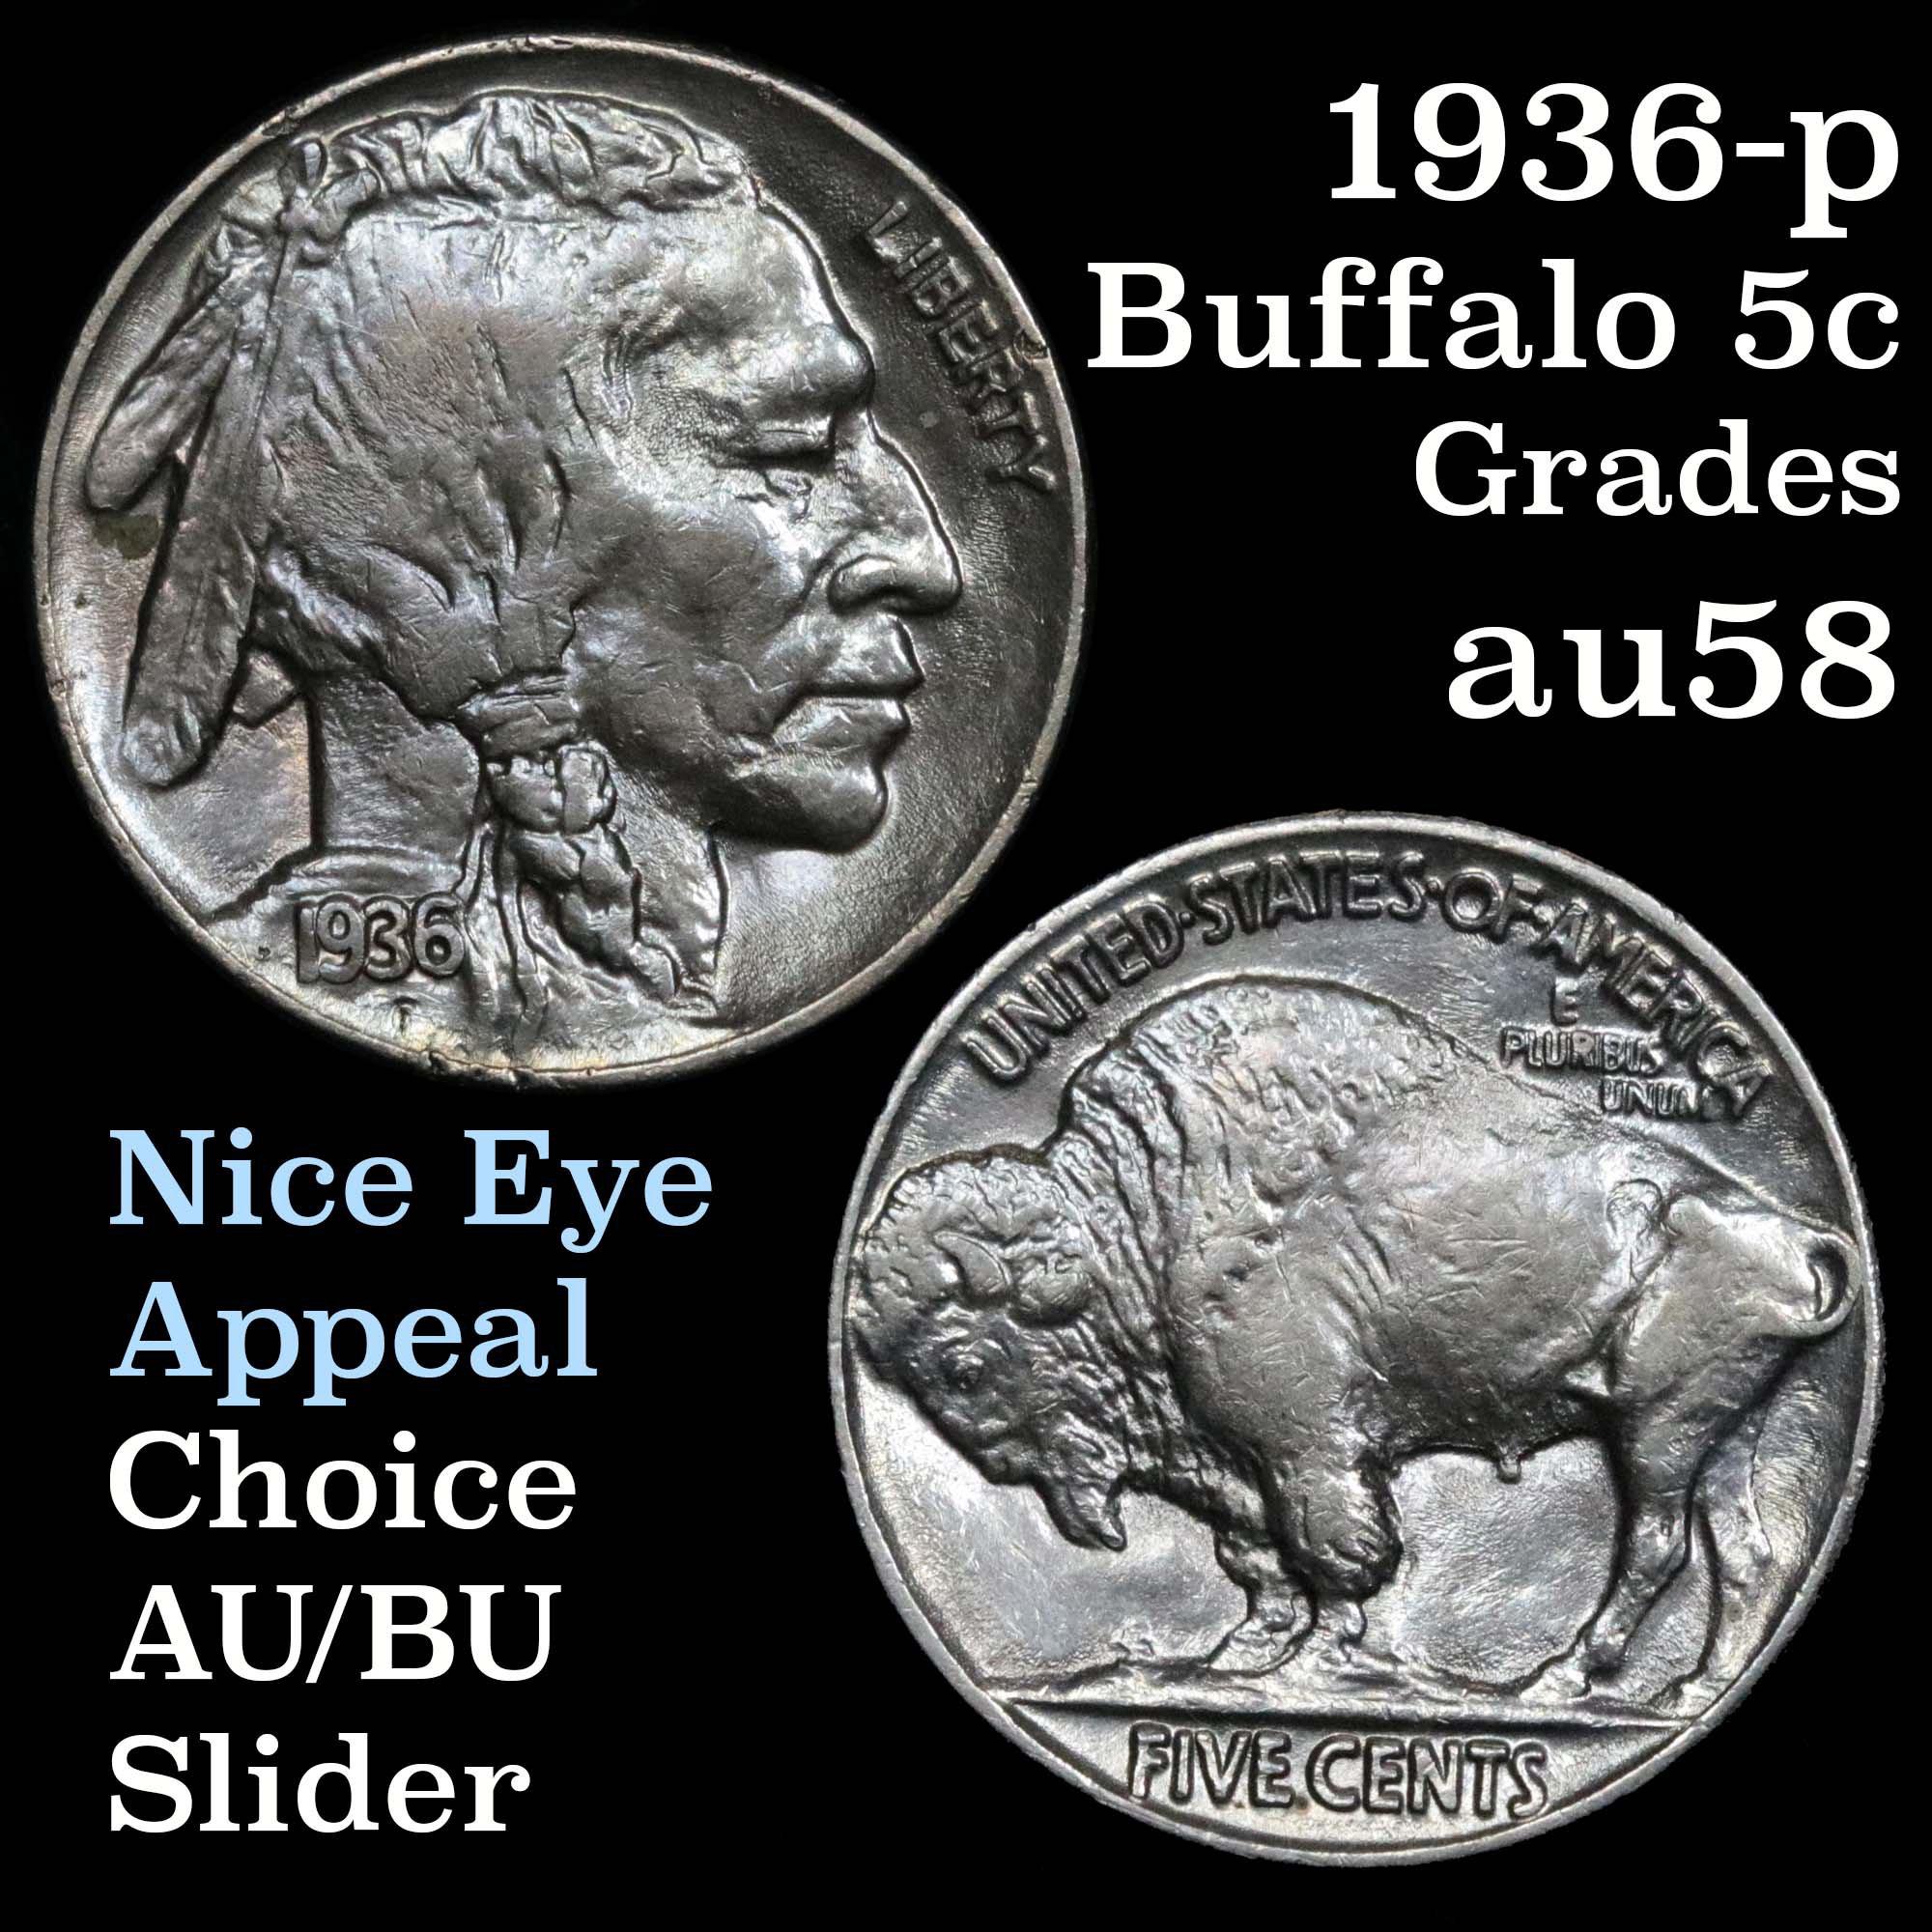 Superb color 1936-p Buffalo Nickel 5c Grades Choice AU/BU Slider